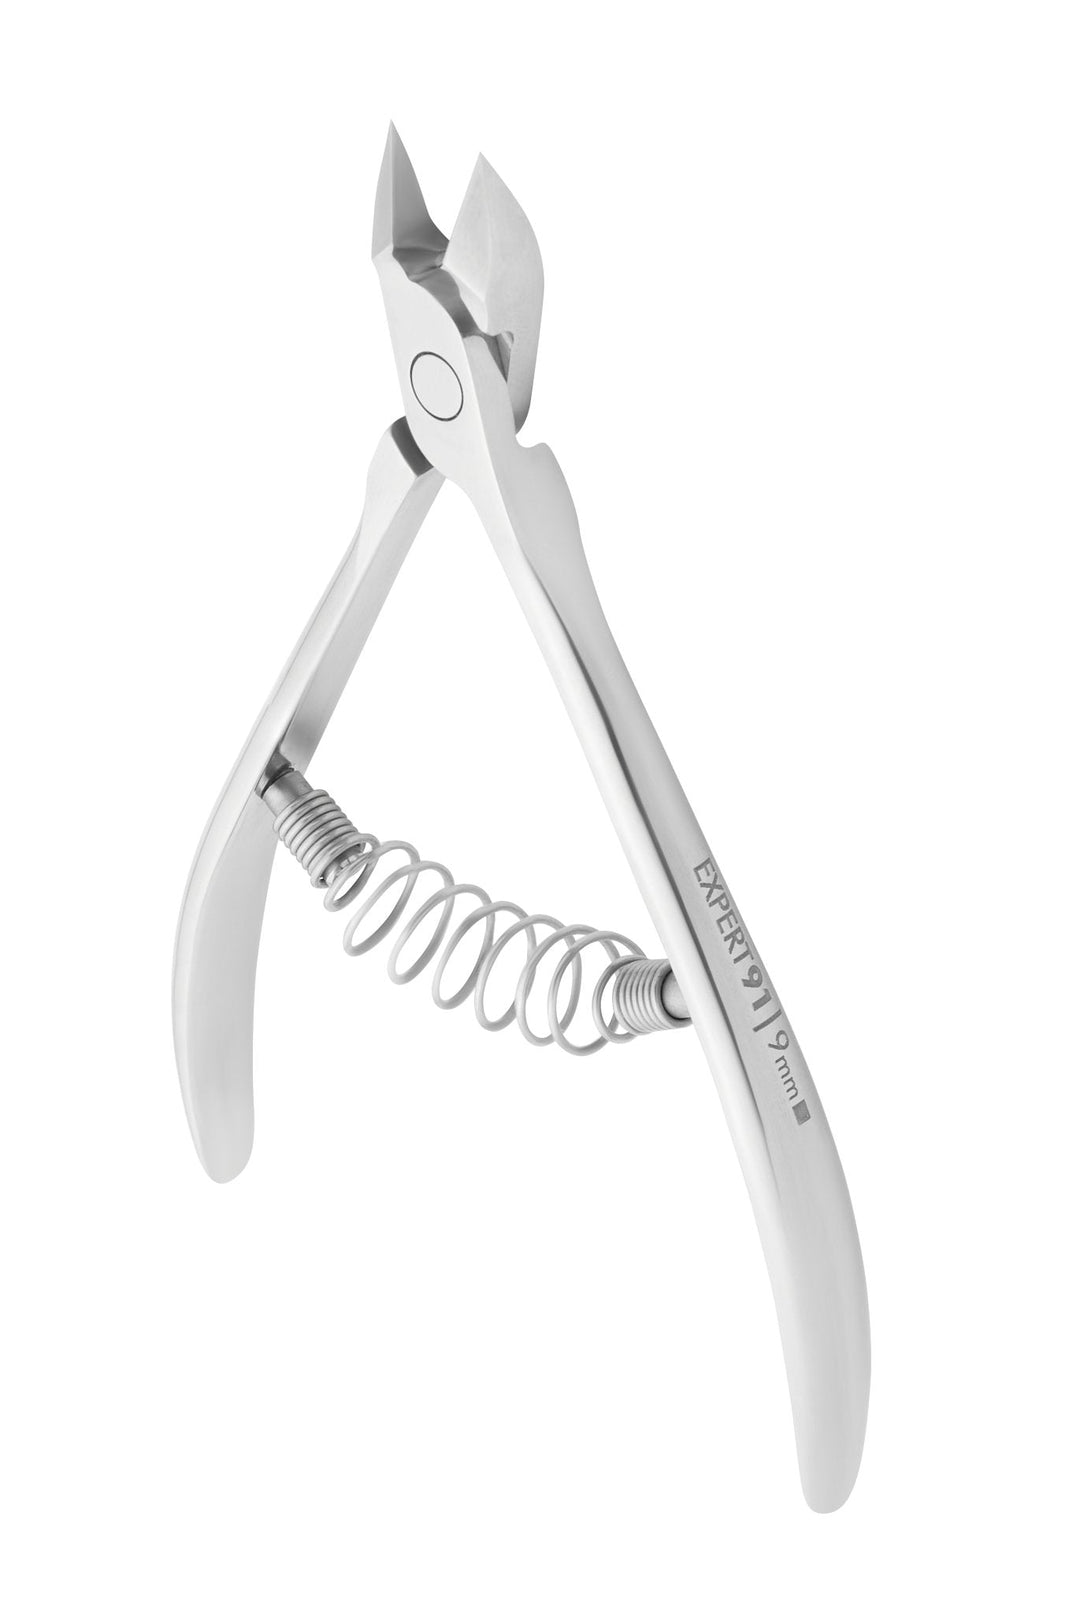 Staleks Cuticle Nipper Expert 91 - 9 mm jaw | Professional Manicure Tools | Stainless Steel | U-tools